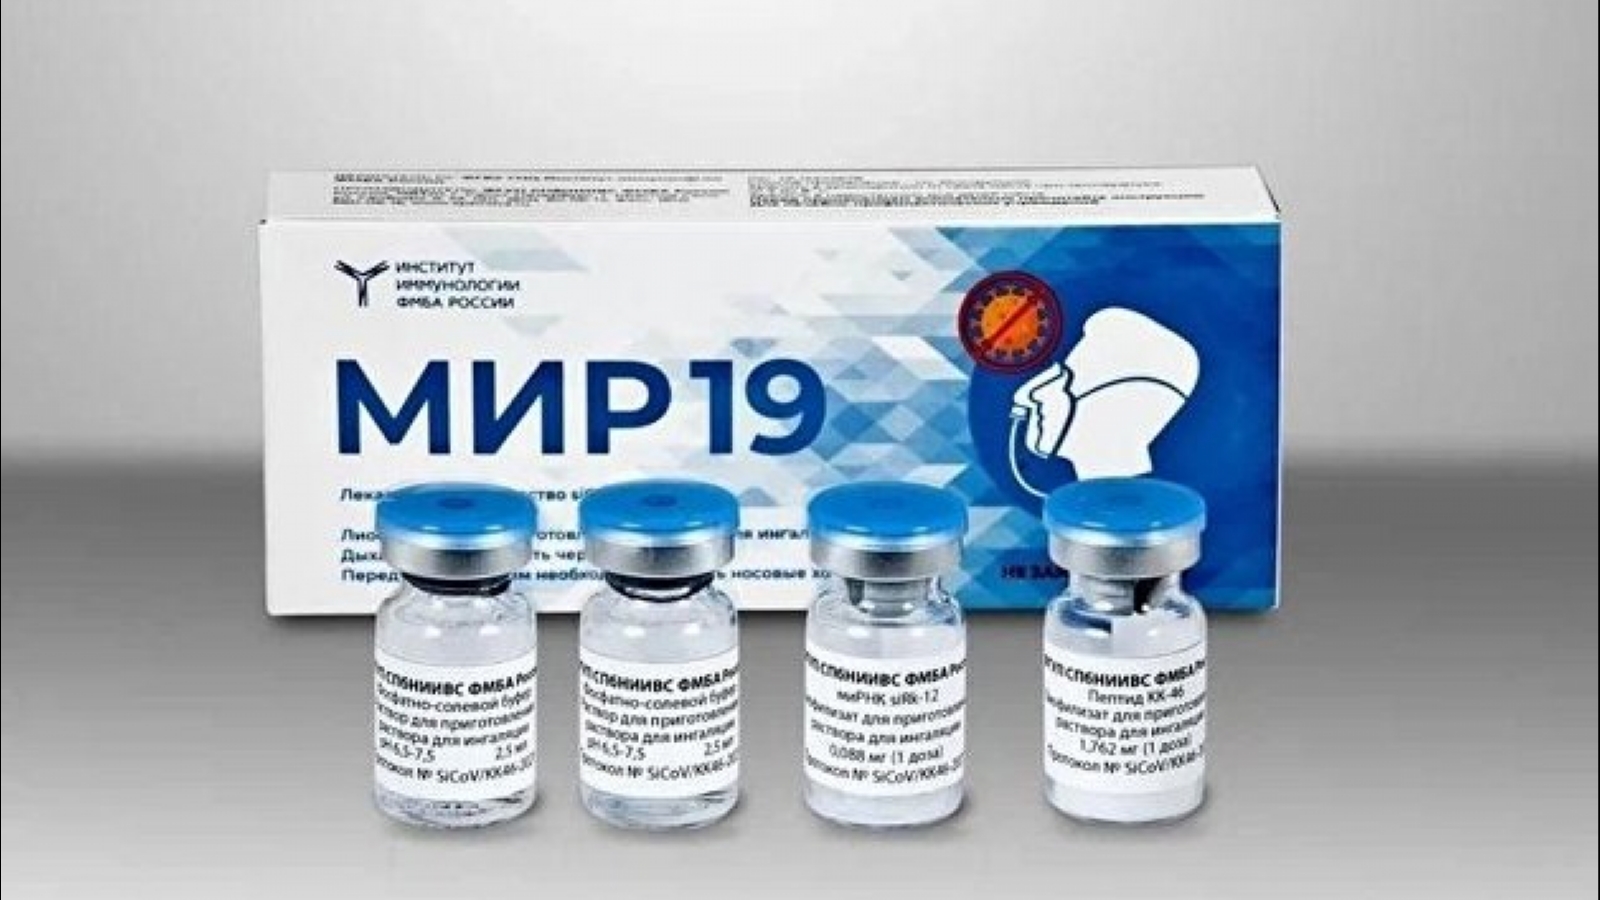 Минздрав России зарегистрировал лекарство от коронавируса "МИР 19" - фото 1